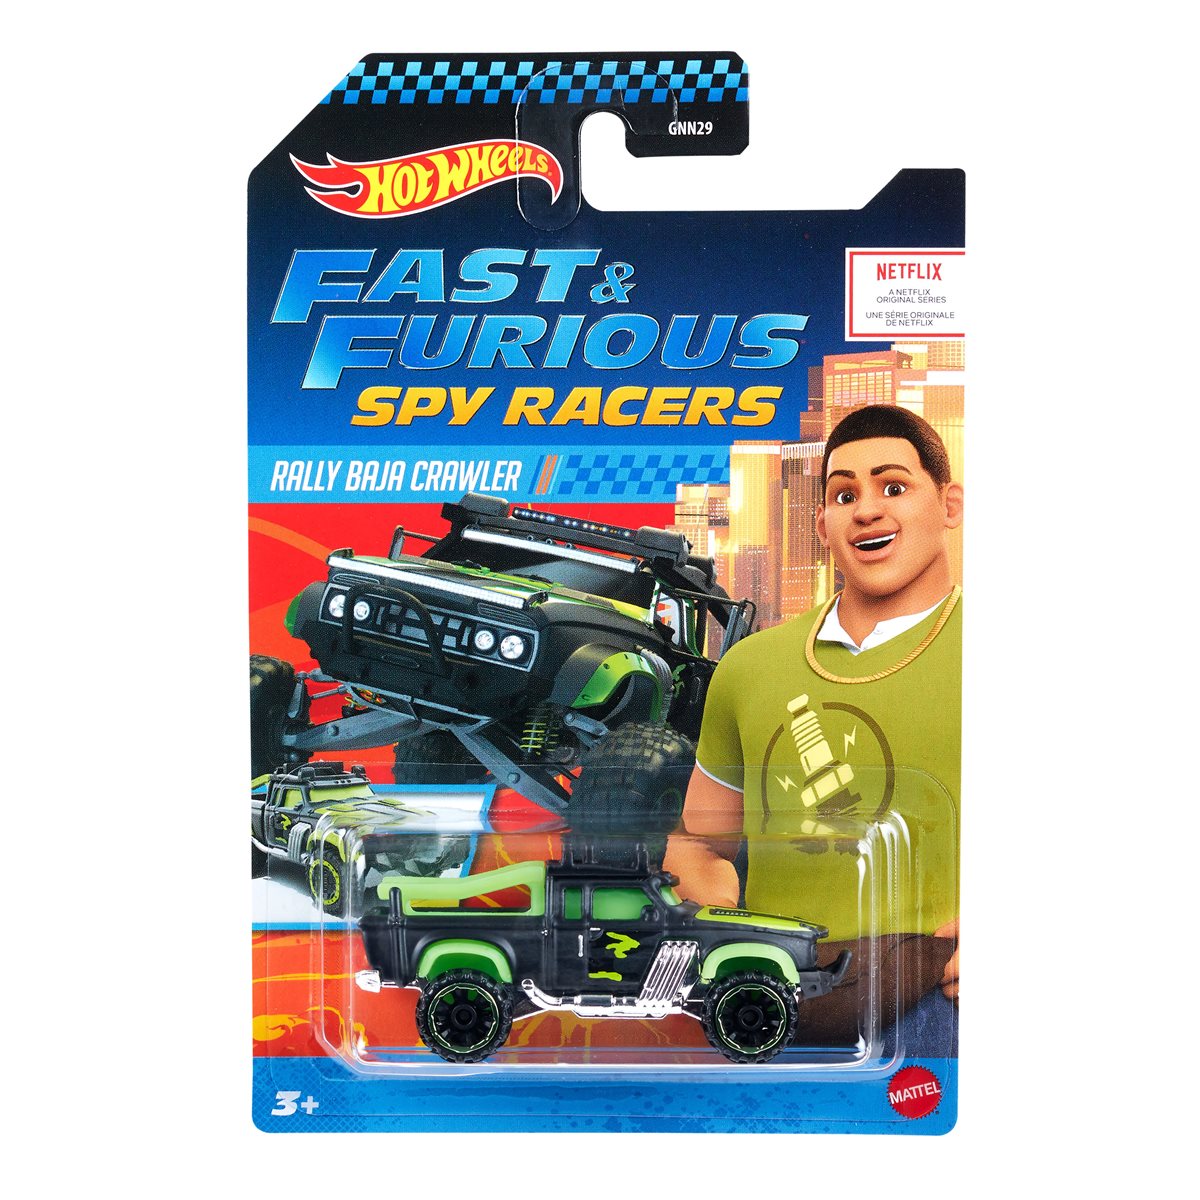 2020 Hot Wheels 1:64 Fast & Furious Spy Racers NETFLIX SERIES GNN29-979A 